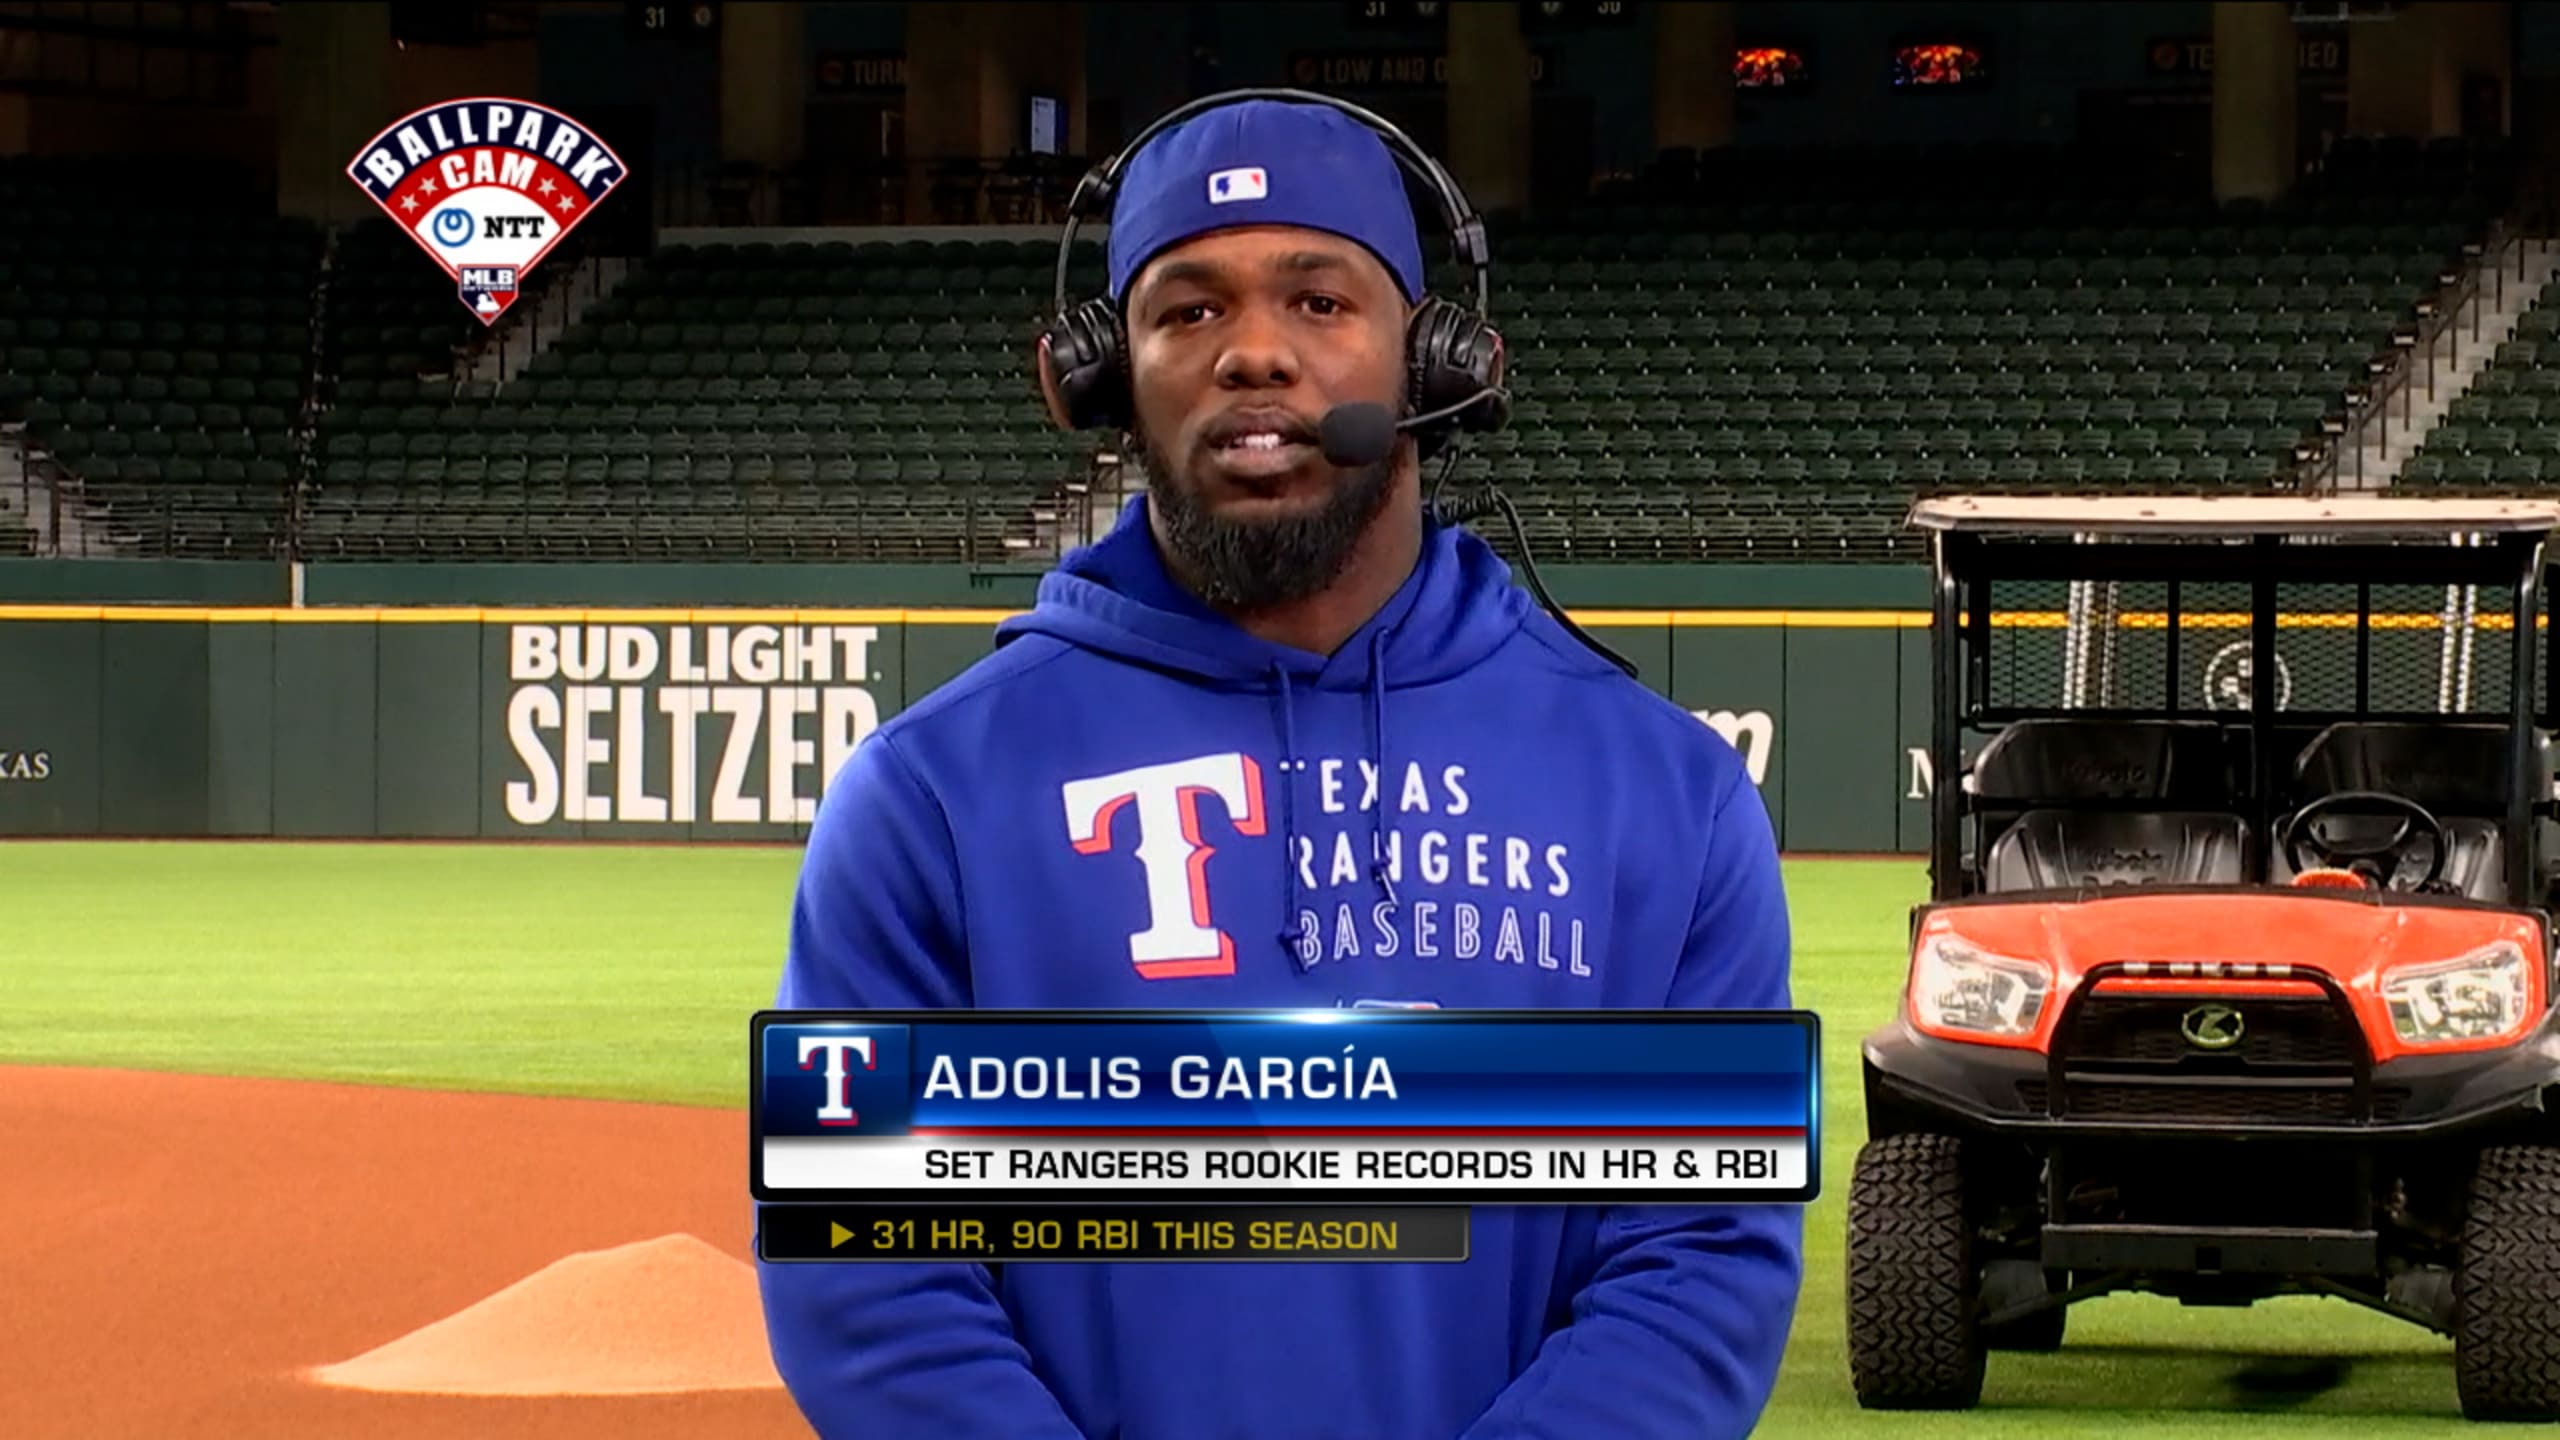 MLB Network - Adolis García joined the Texas Rangers 20